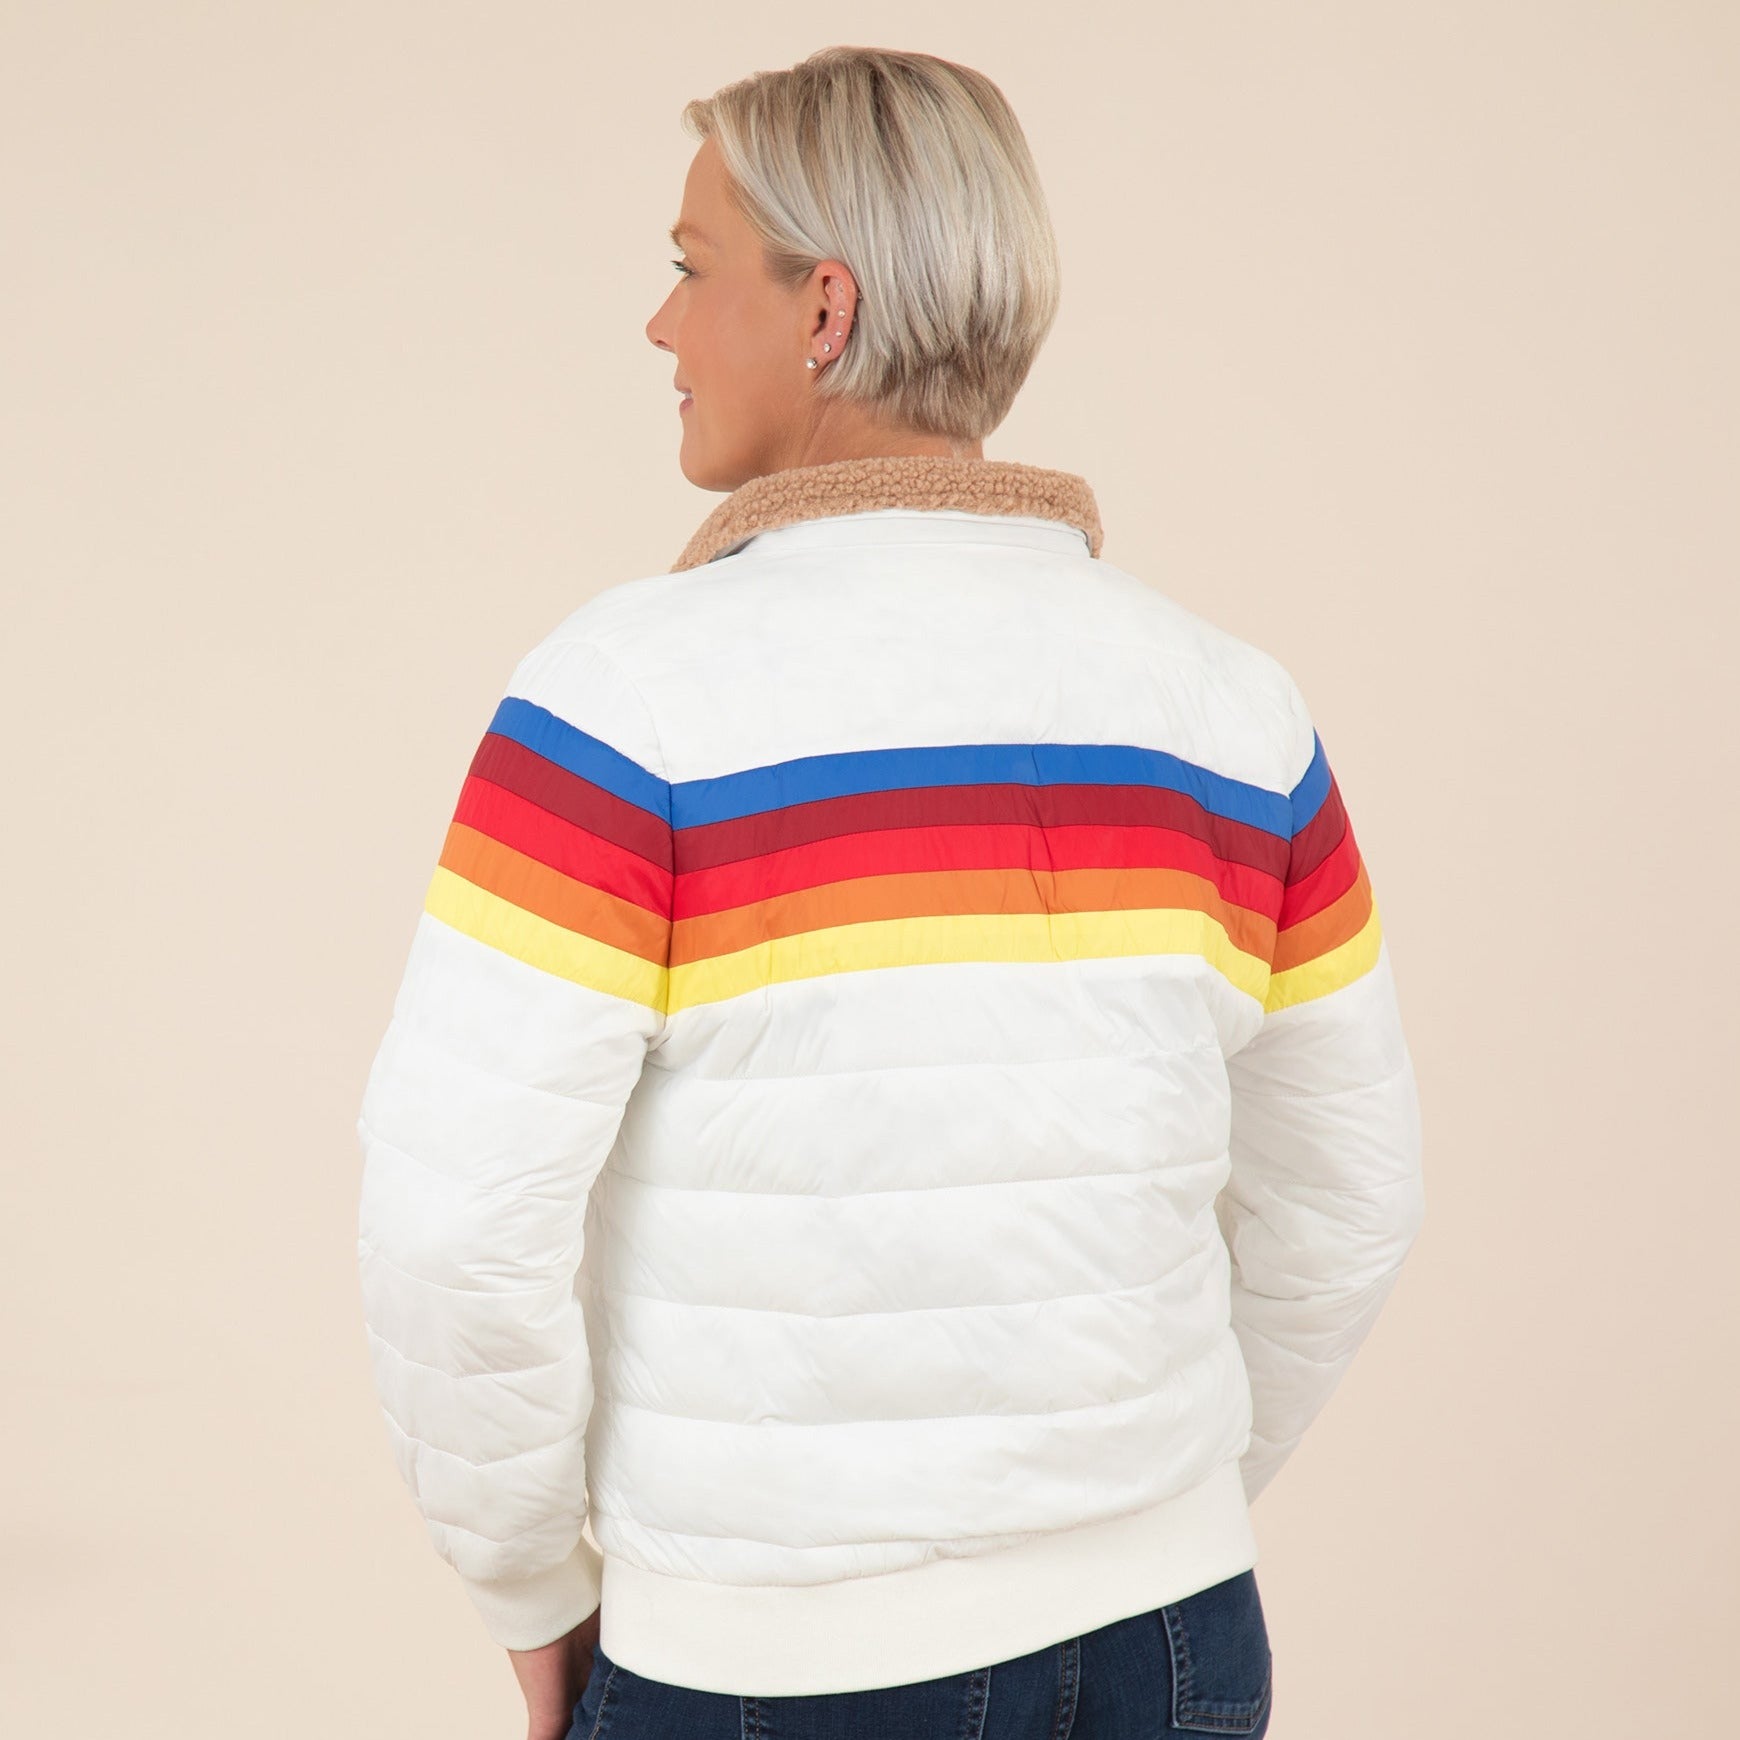 Chasing Rainbows Retro Stripe Insulated Jacket - White - XL